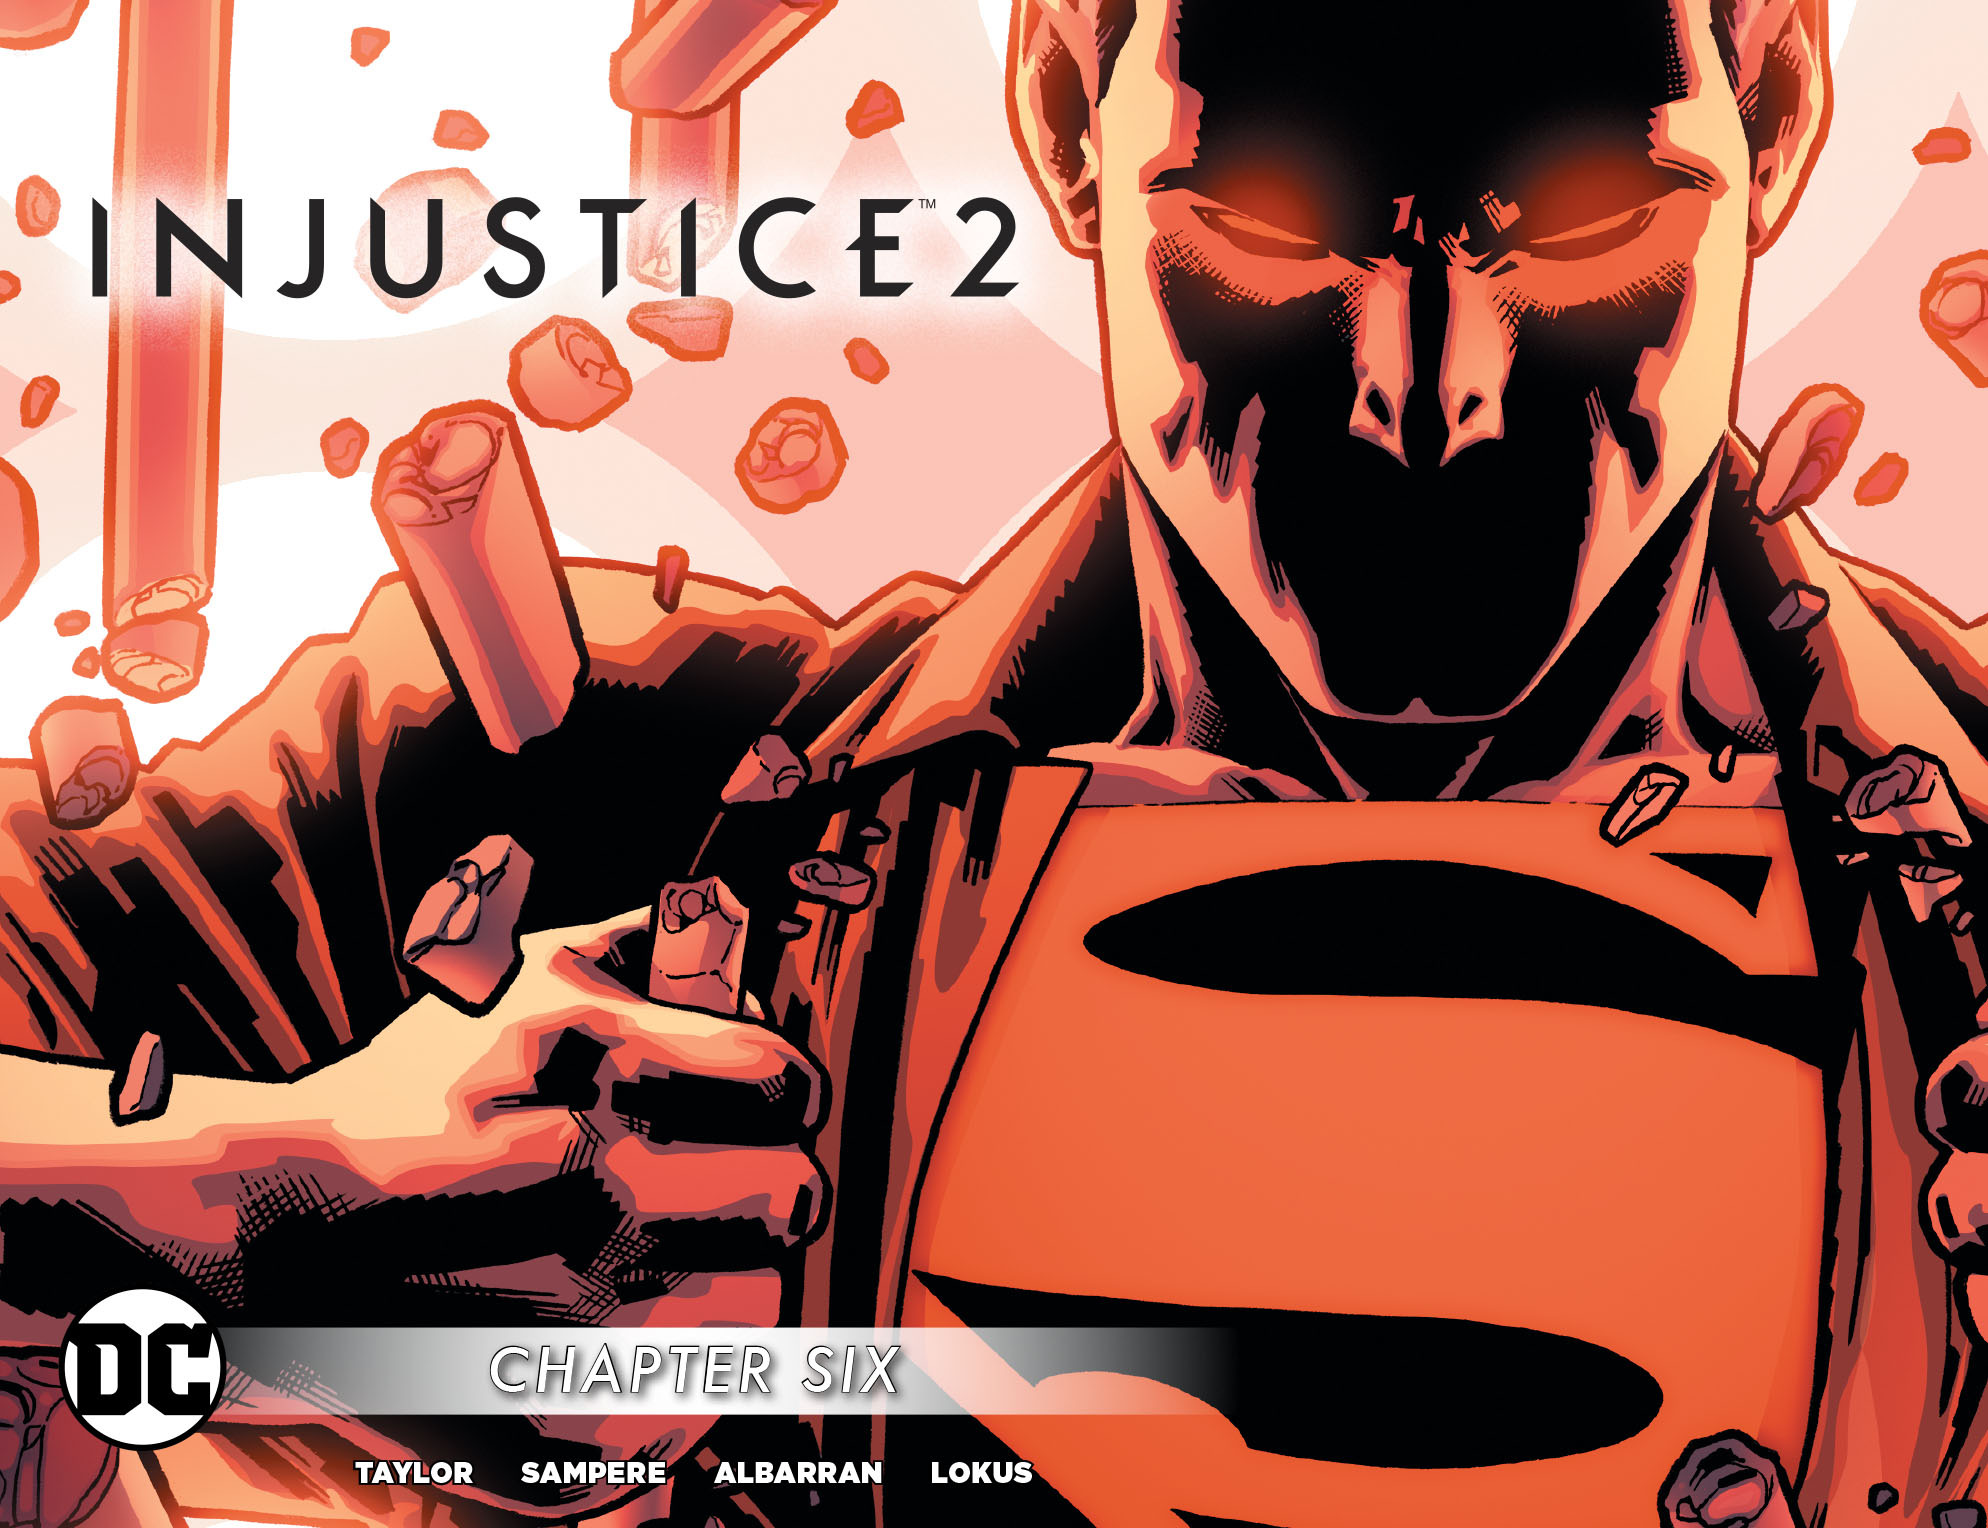 Жизнь несправедлива 2 часть. Несправедливость 2. Несправедливость DC. Injustice 2 Comics. Injustice 2 Бэтмен.